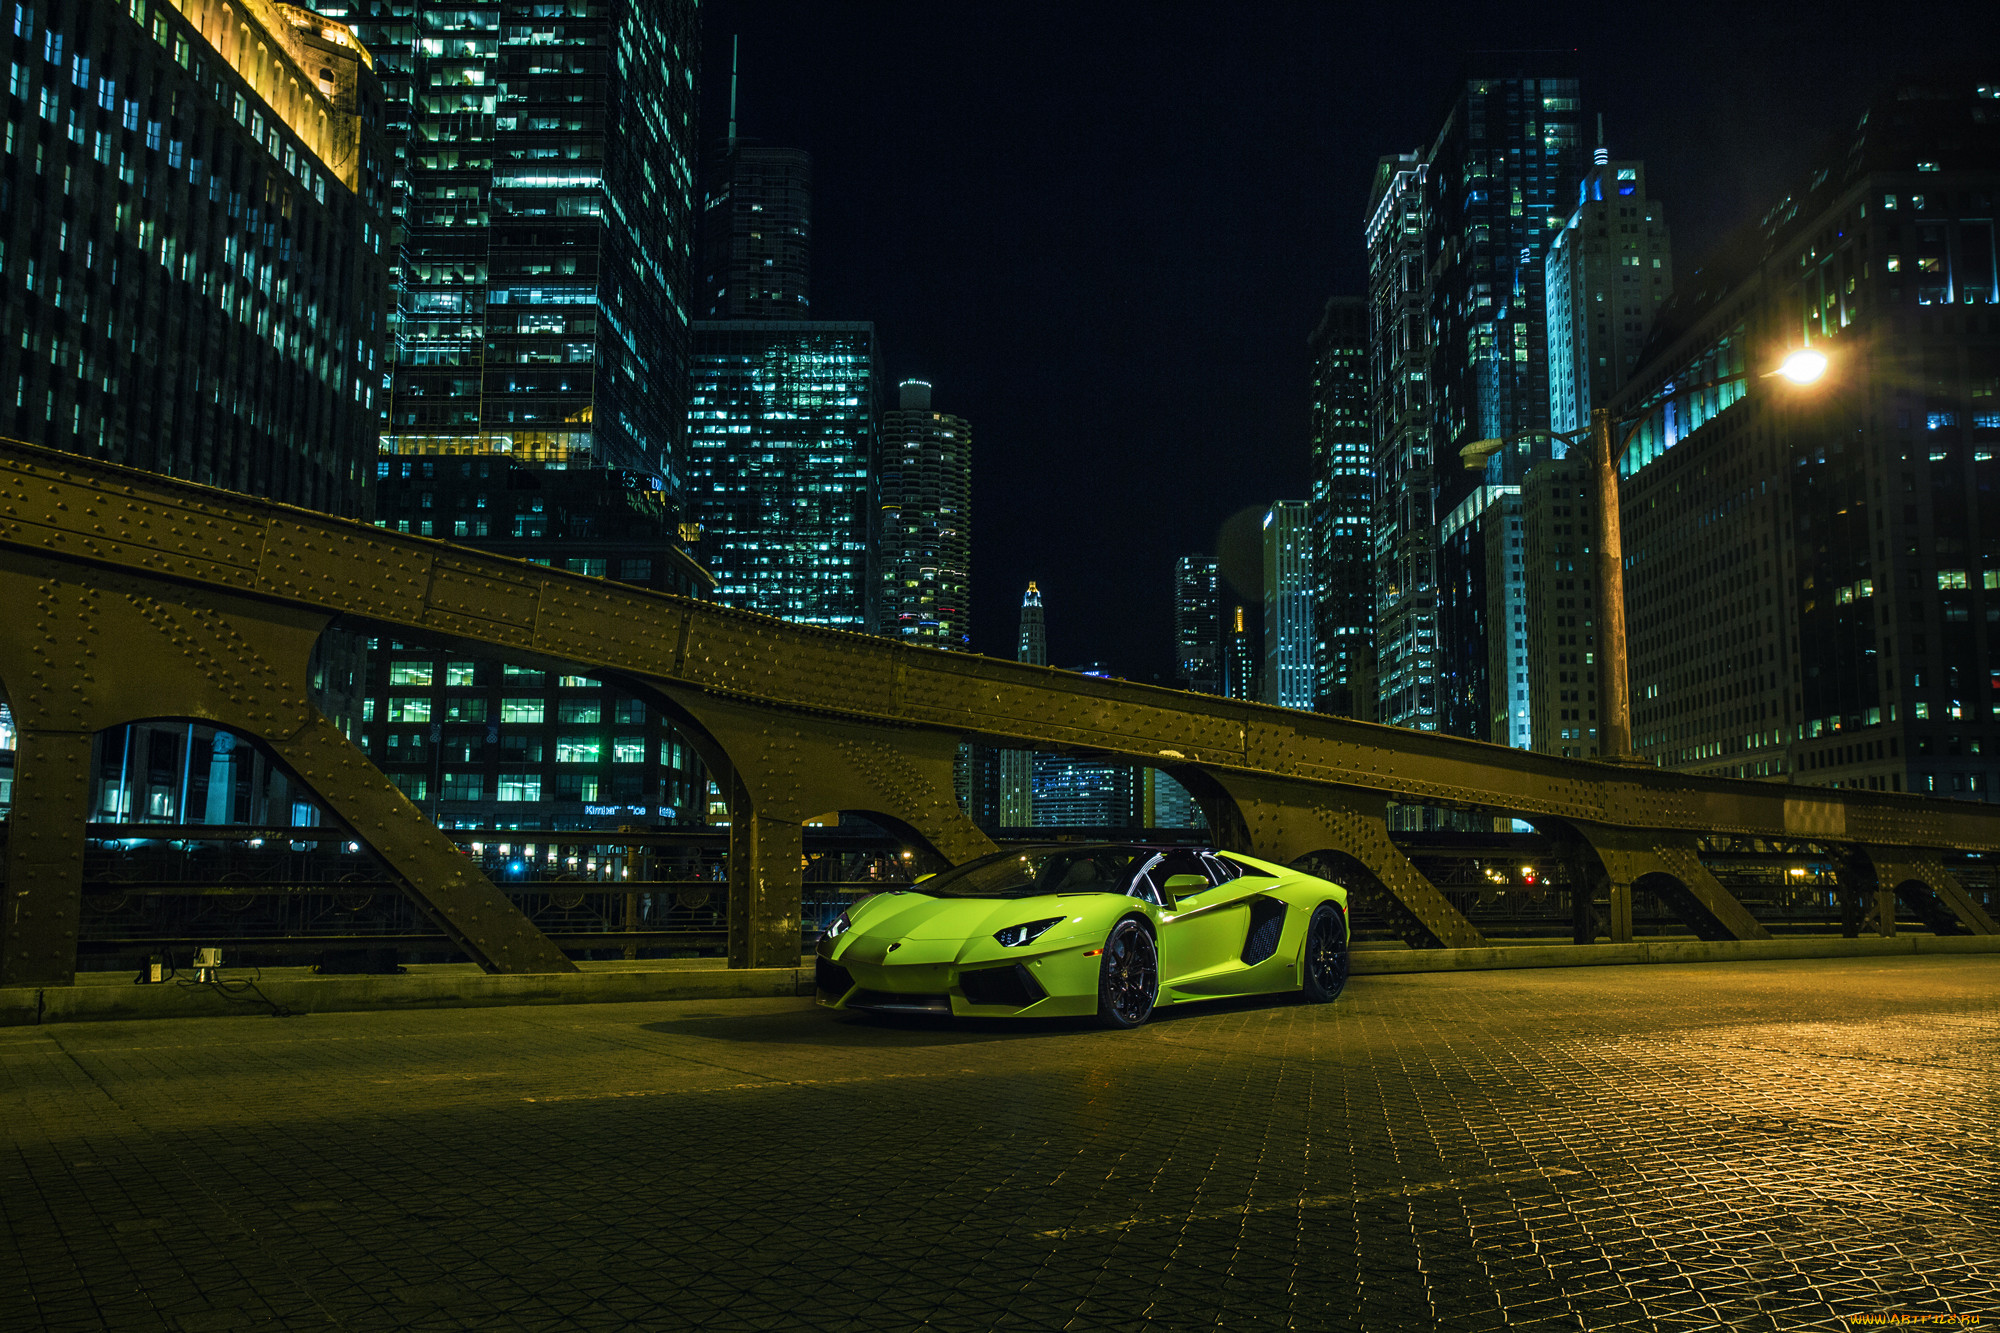 Ban cars from city. Ламборджини в Нью Йорке. Мегаполис Дубаи Ламборгини. Green Lamborghini Aventador lp700-4 Roadster. Ламборджини у Сити.